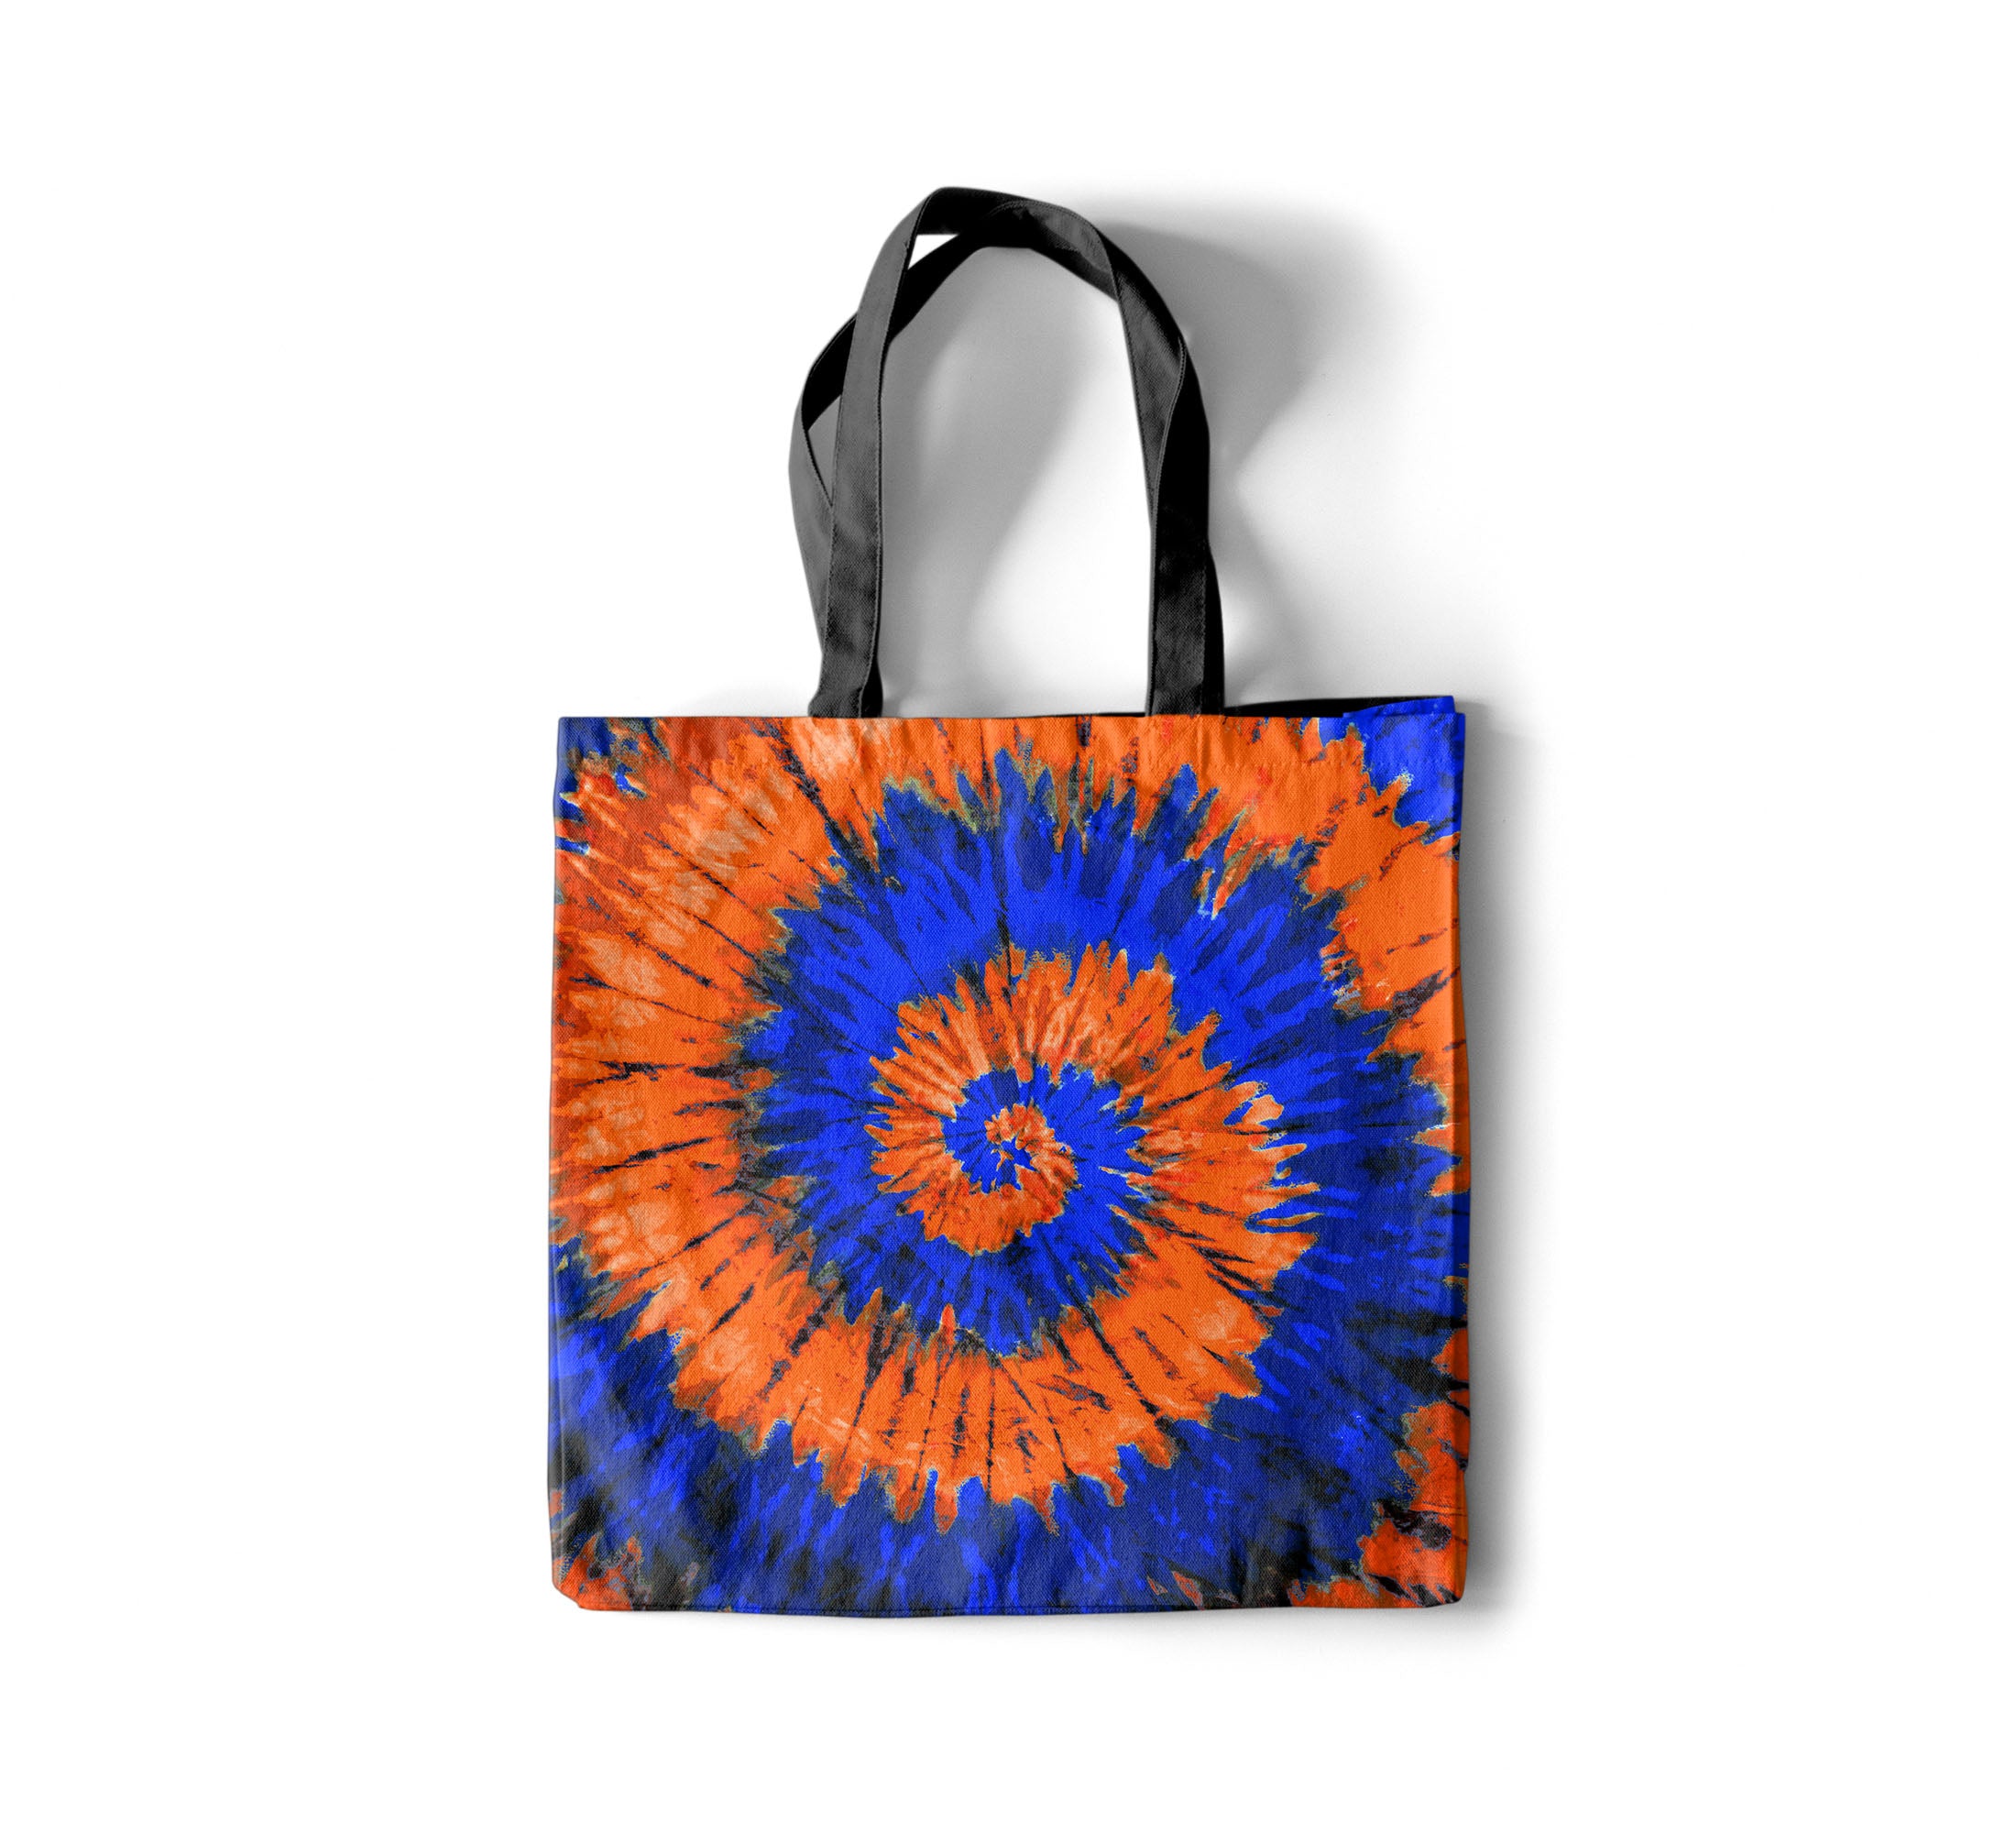 Orange Tie Dye Reusable Cotton Shopping Tote Bag – Clementine Surfwear